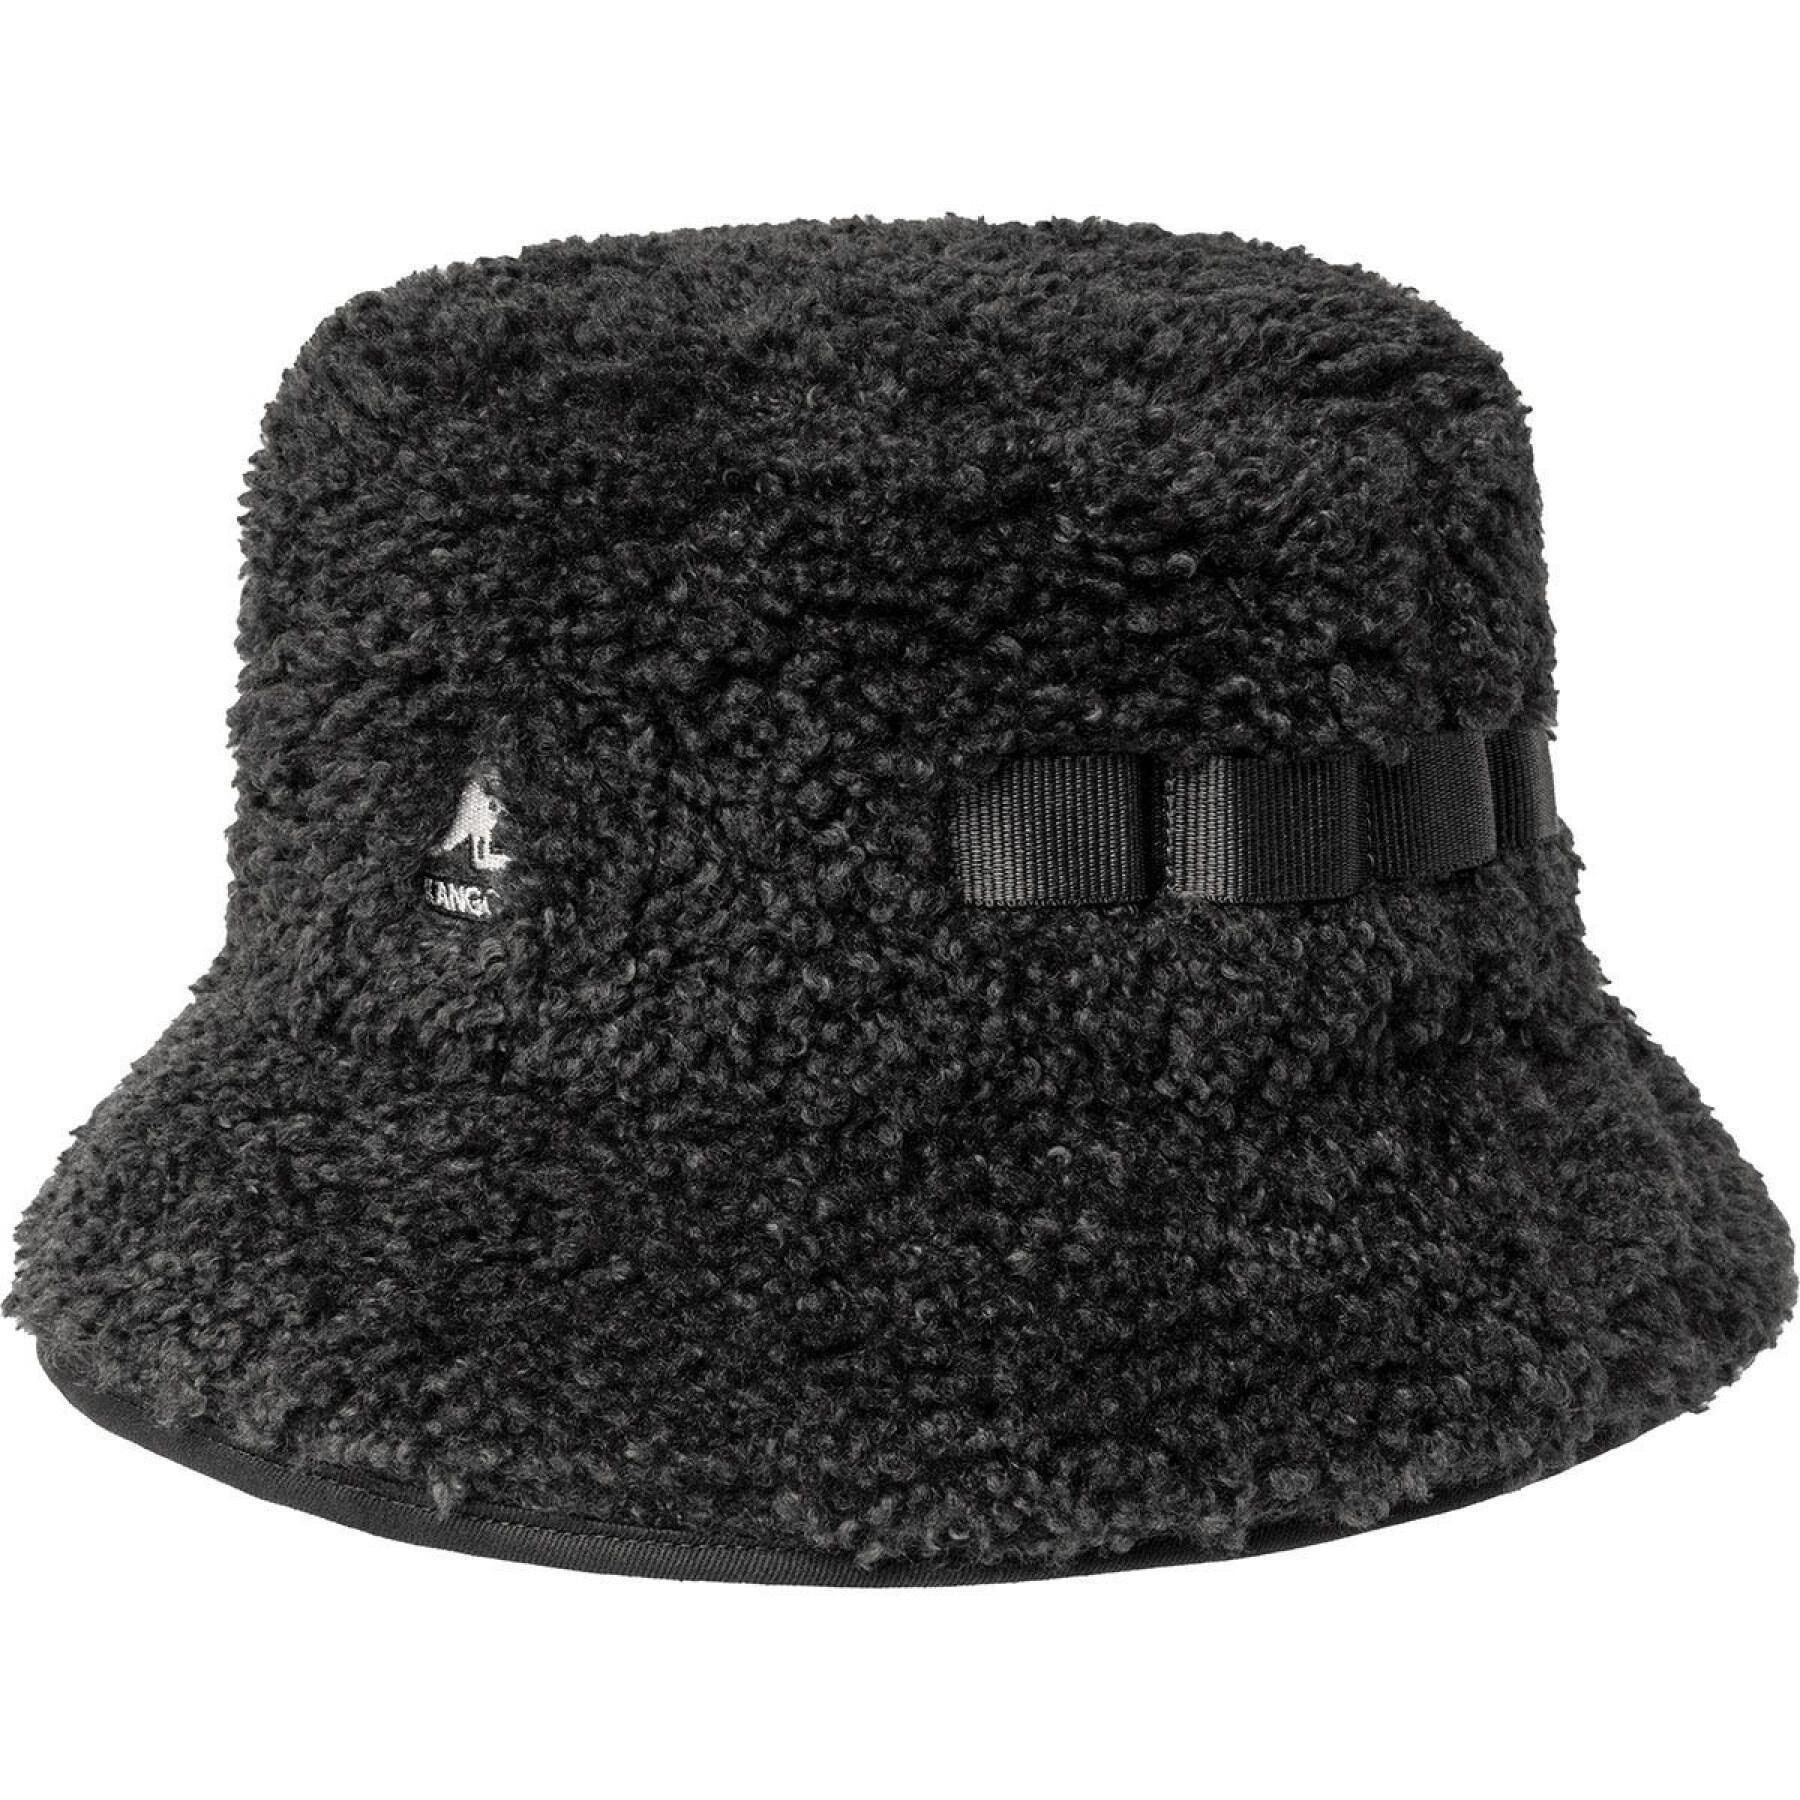 Imitation sheepskin Utility Kangol bucket hat